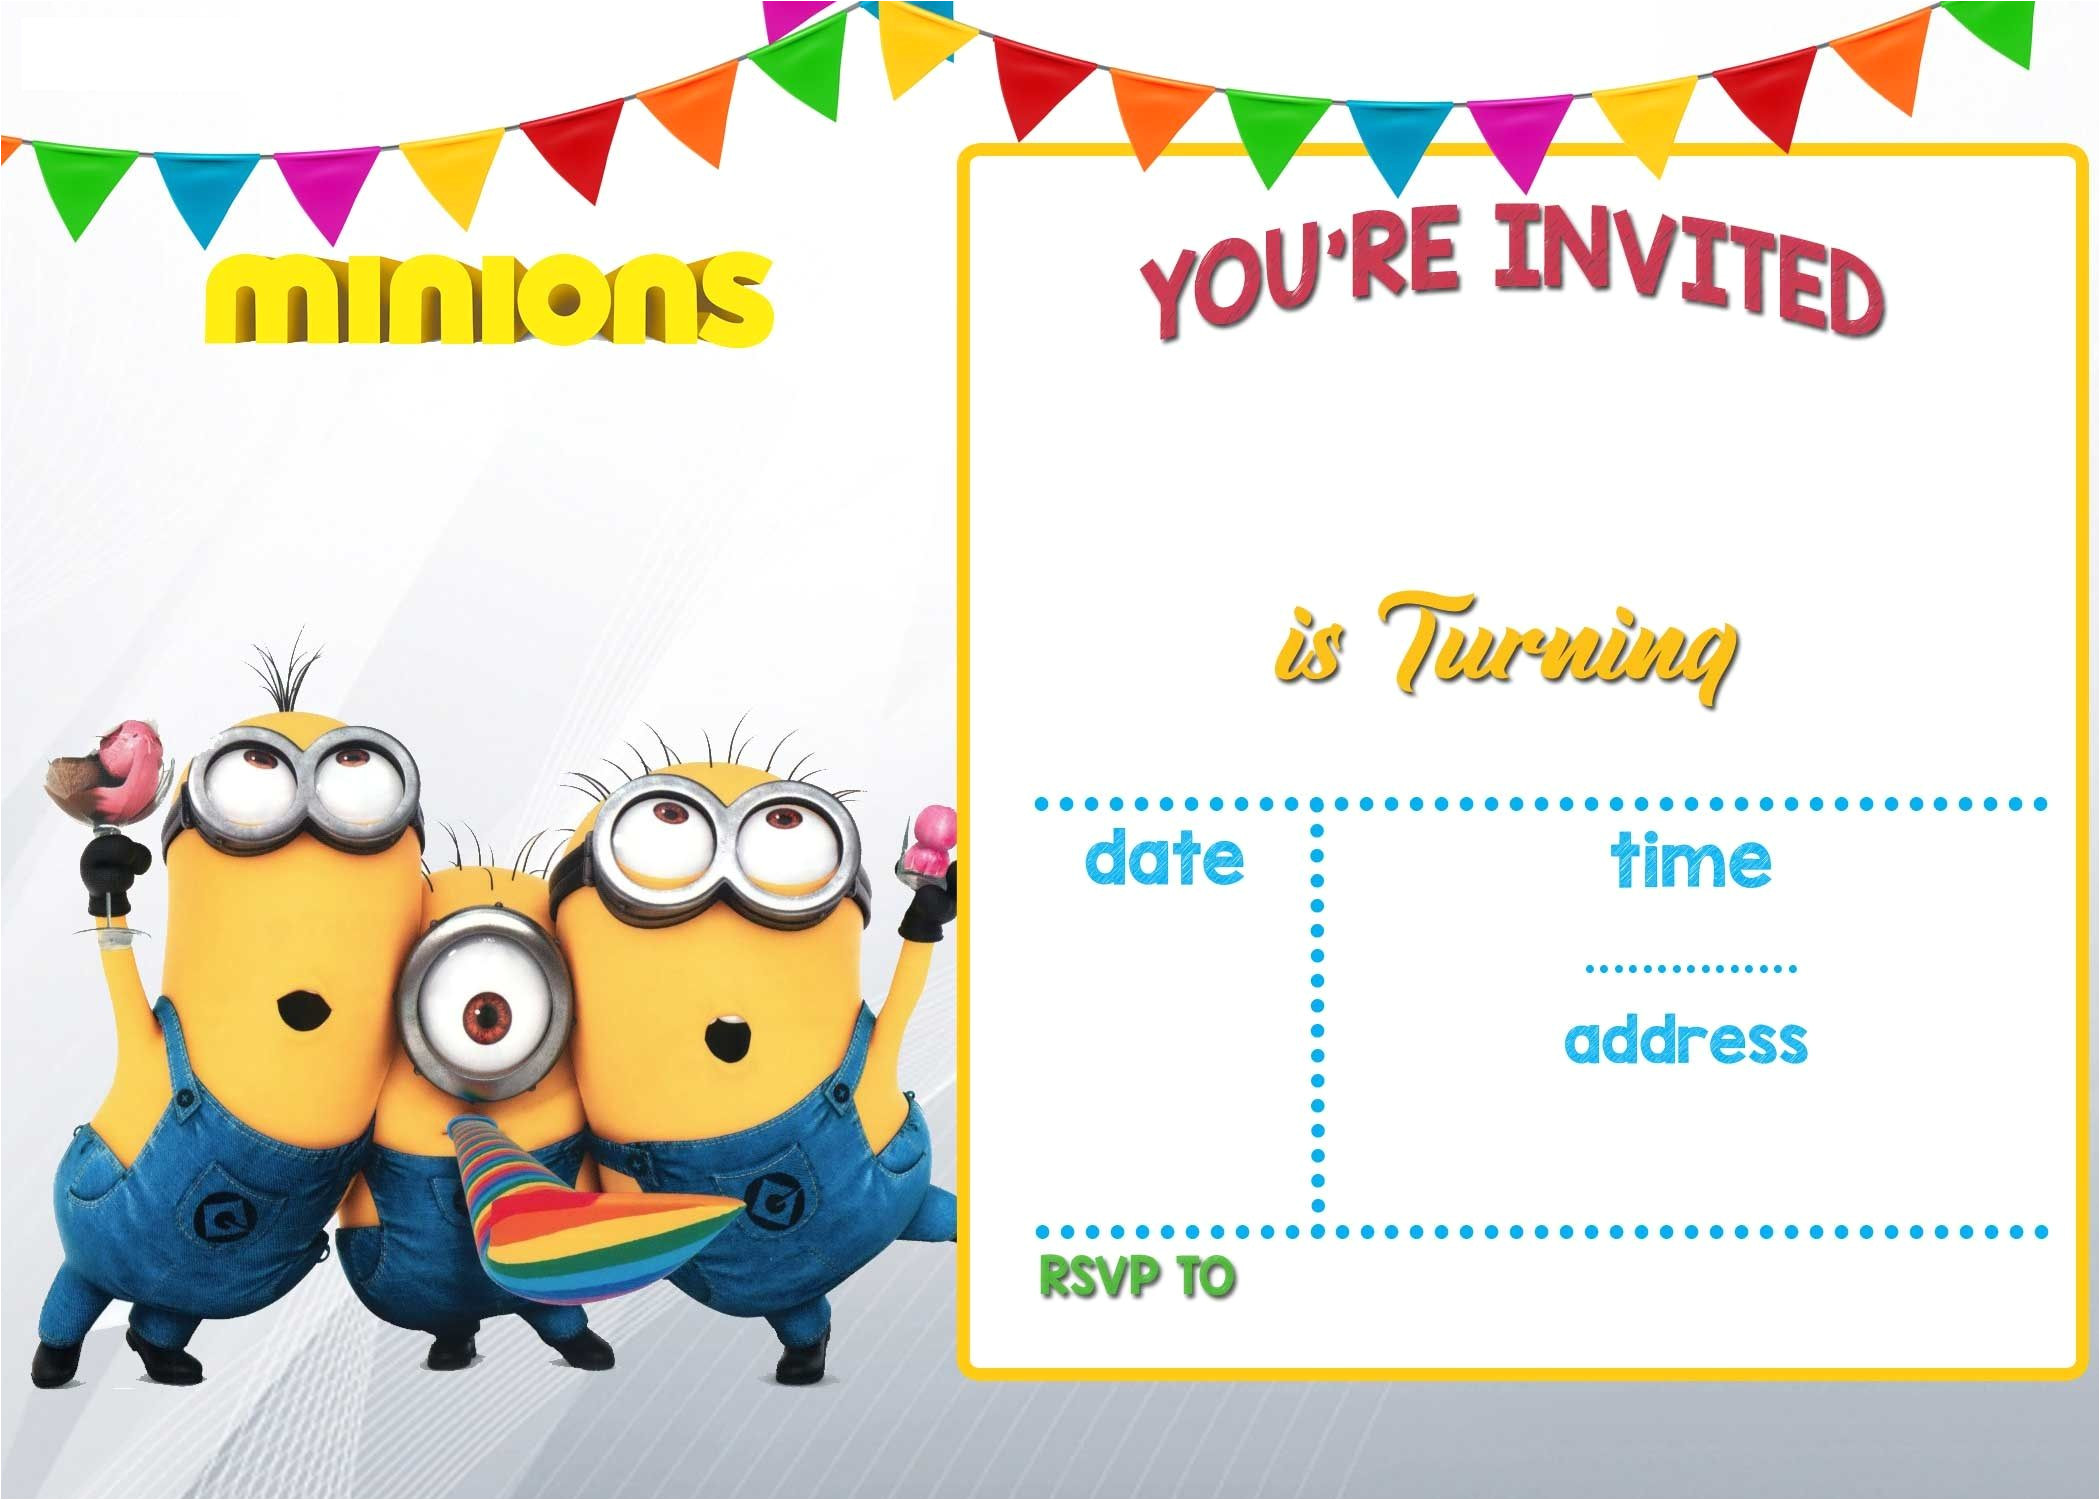 1st Birthday Invitation Card Free Download Invitation Template Free Download Online Invitation